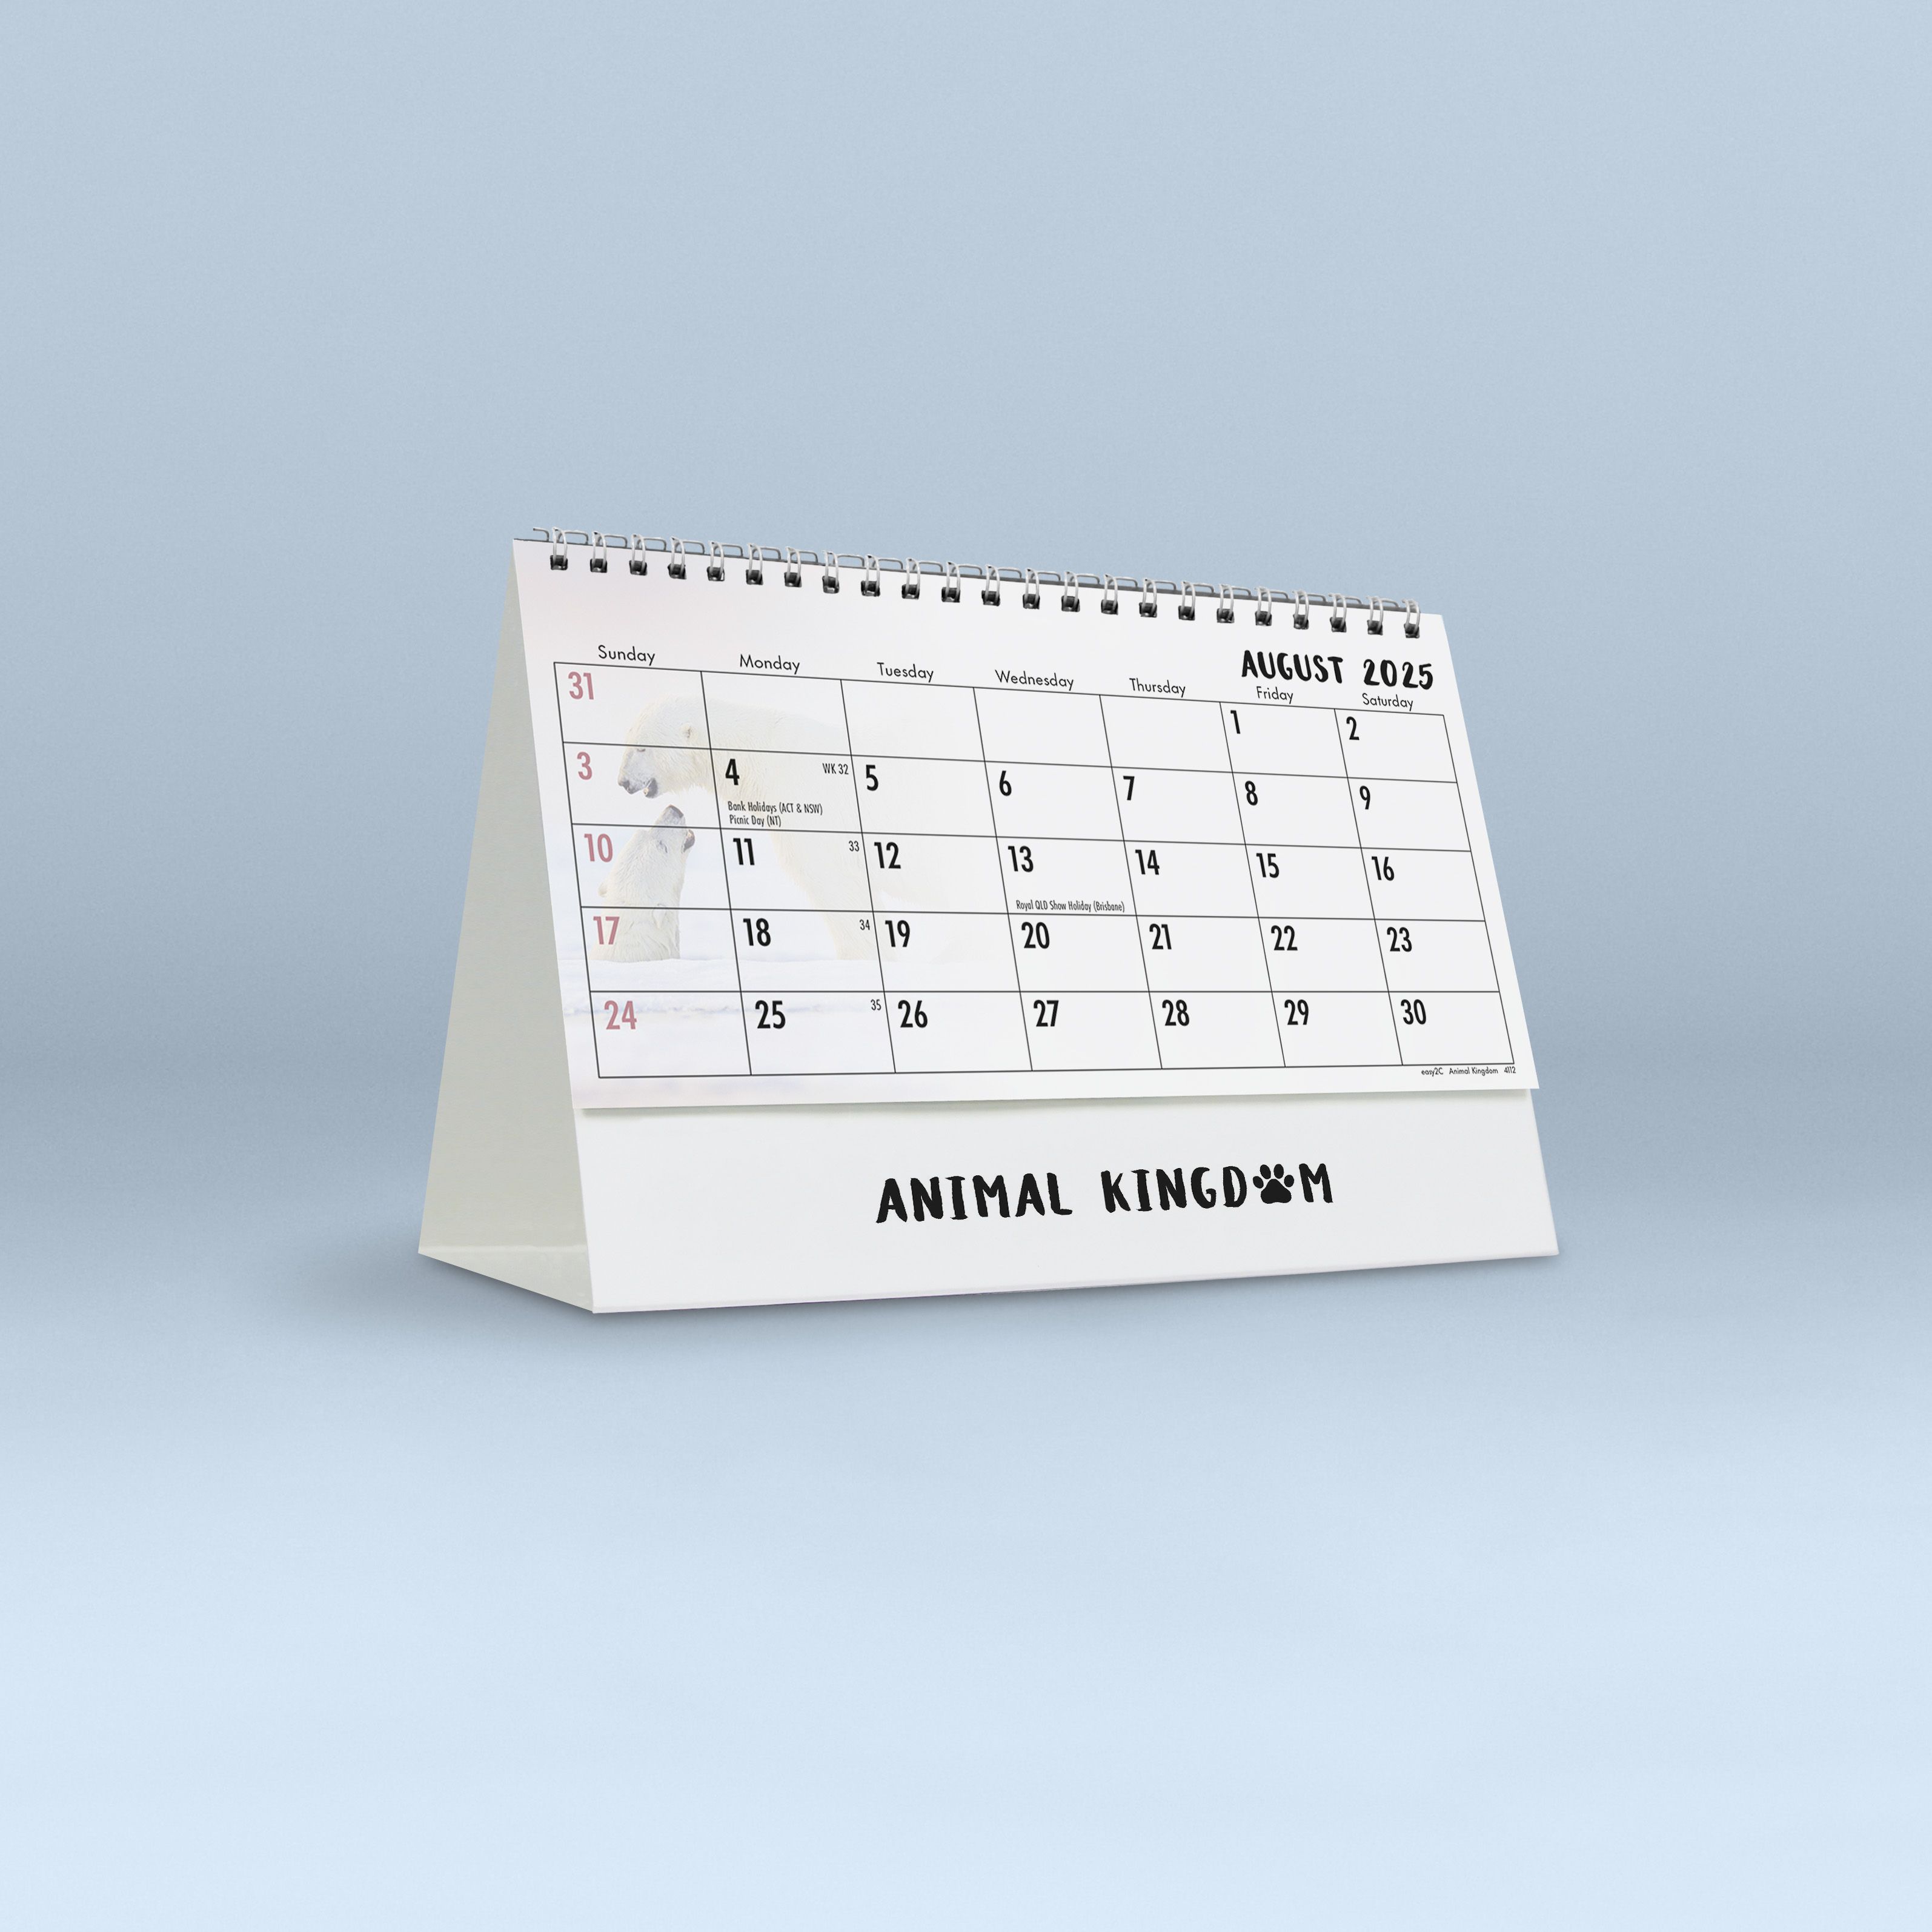 Animal Kingdom_4257_25_15